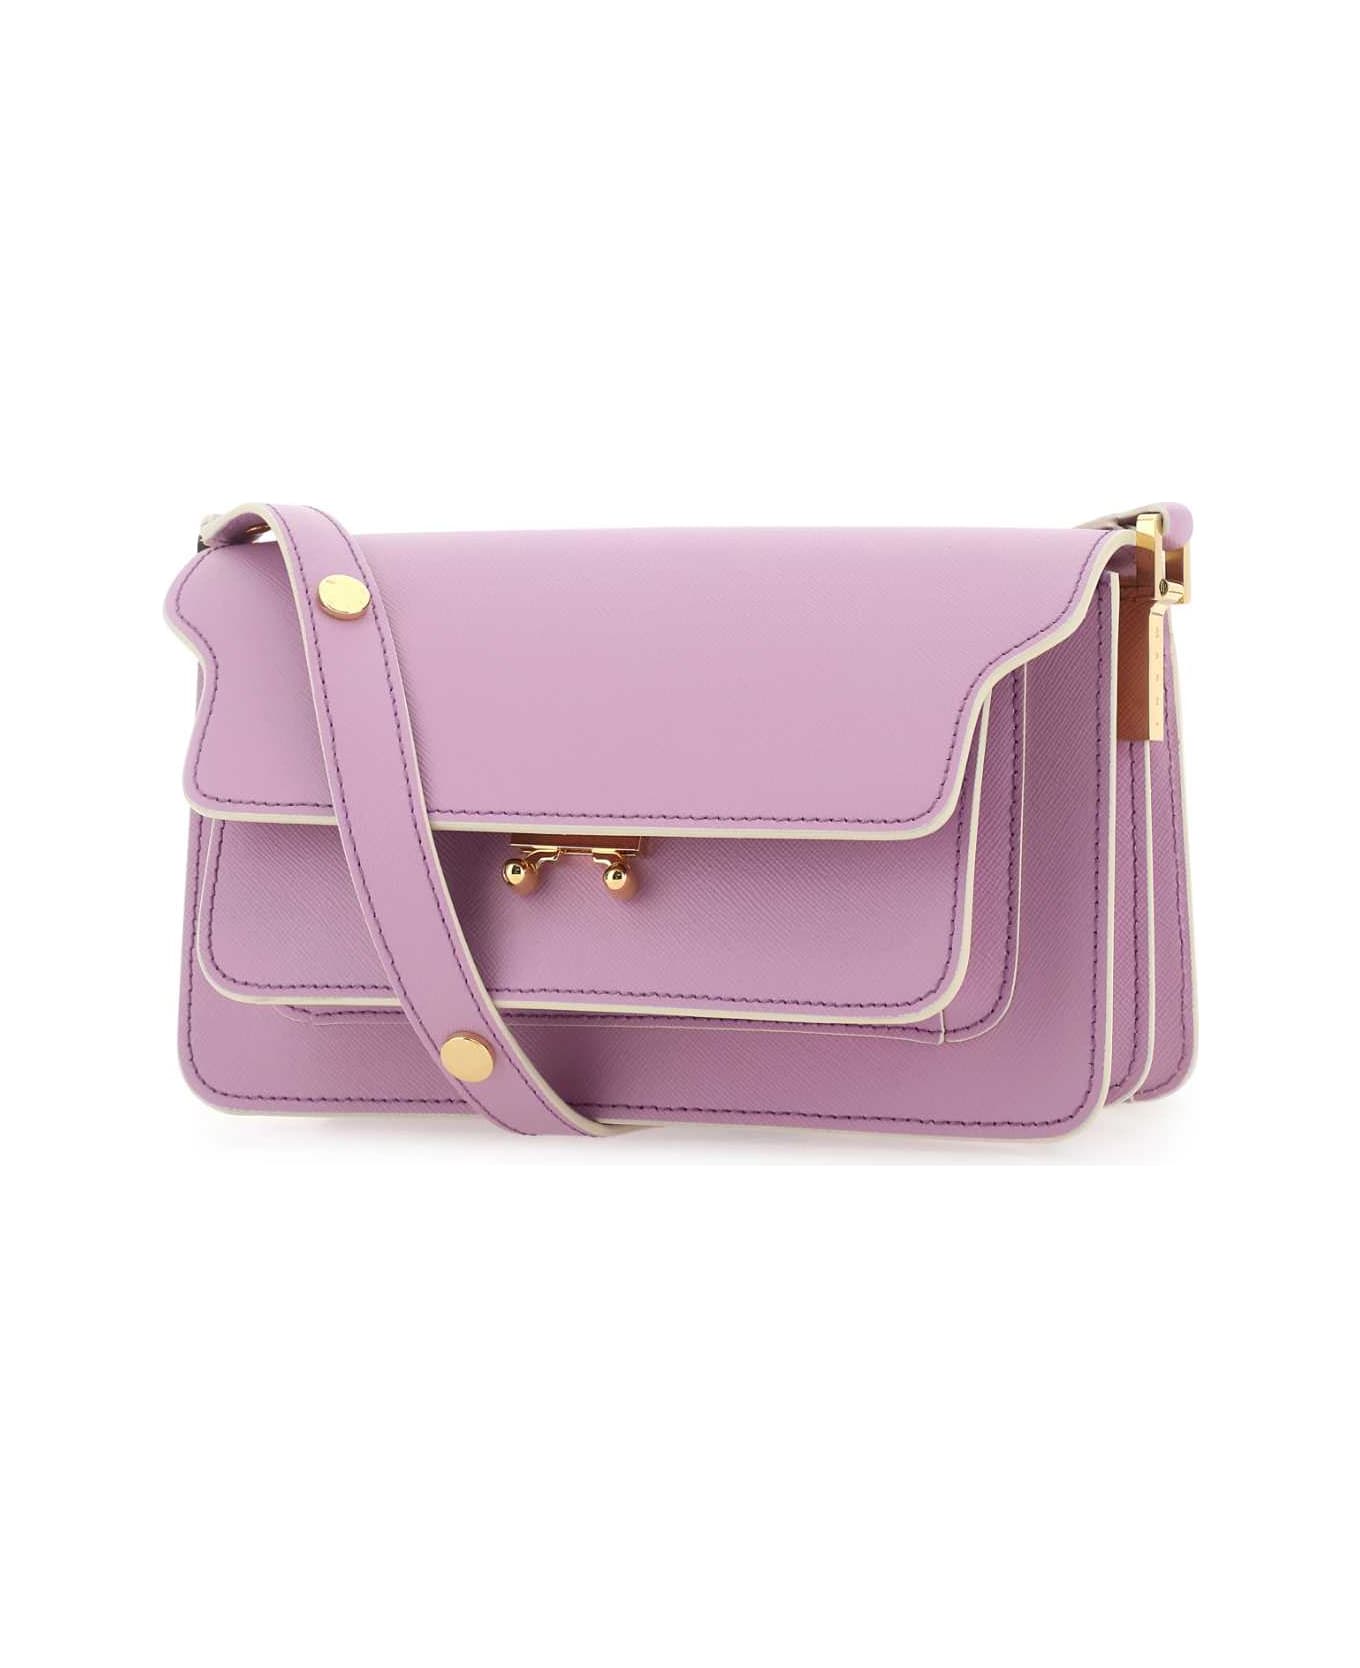 Marni Lilac Leather Mini Trunk Soft Shoulder Bag - LIGHTLILA